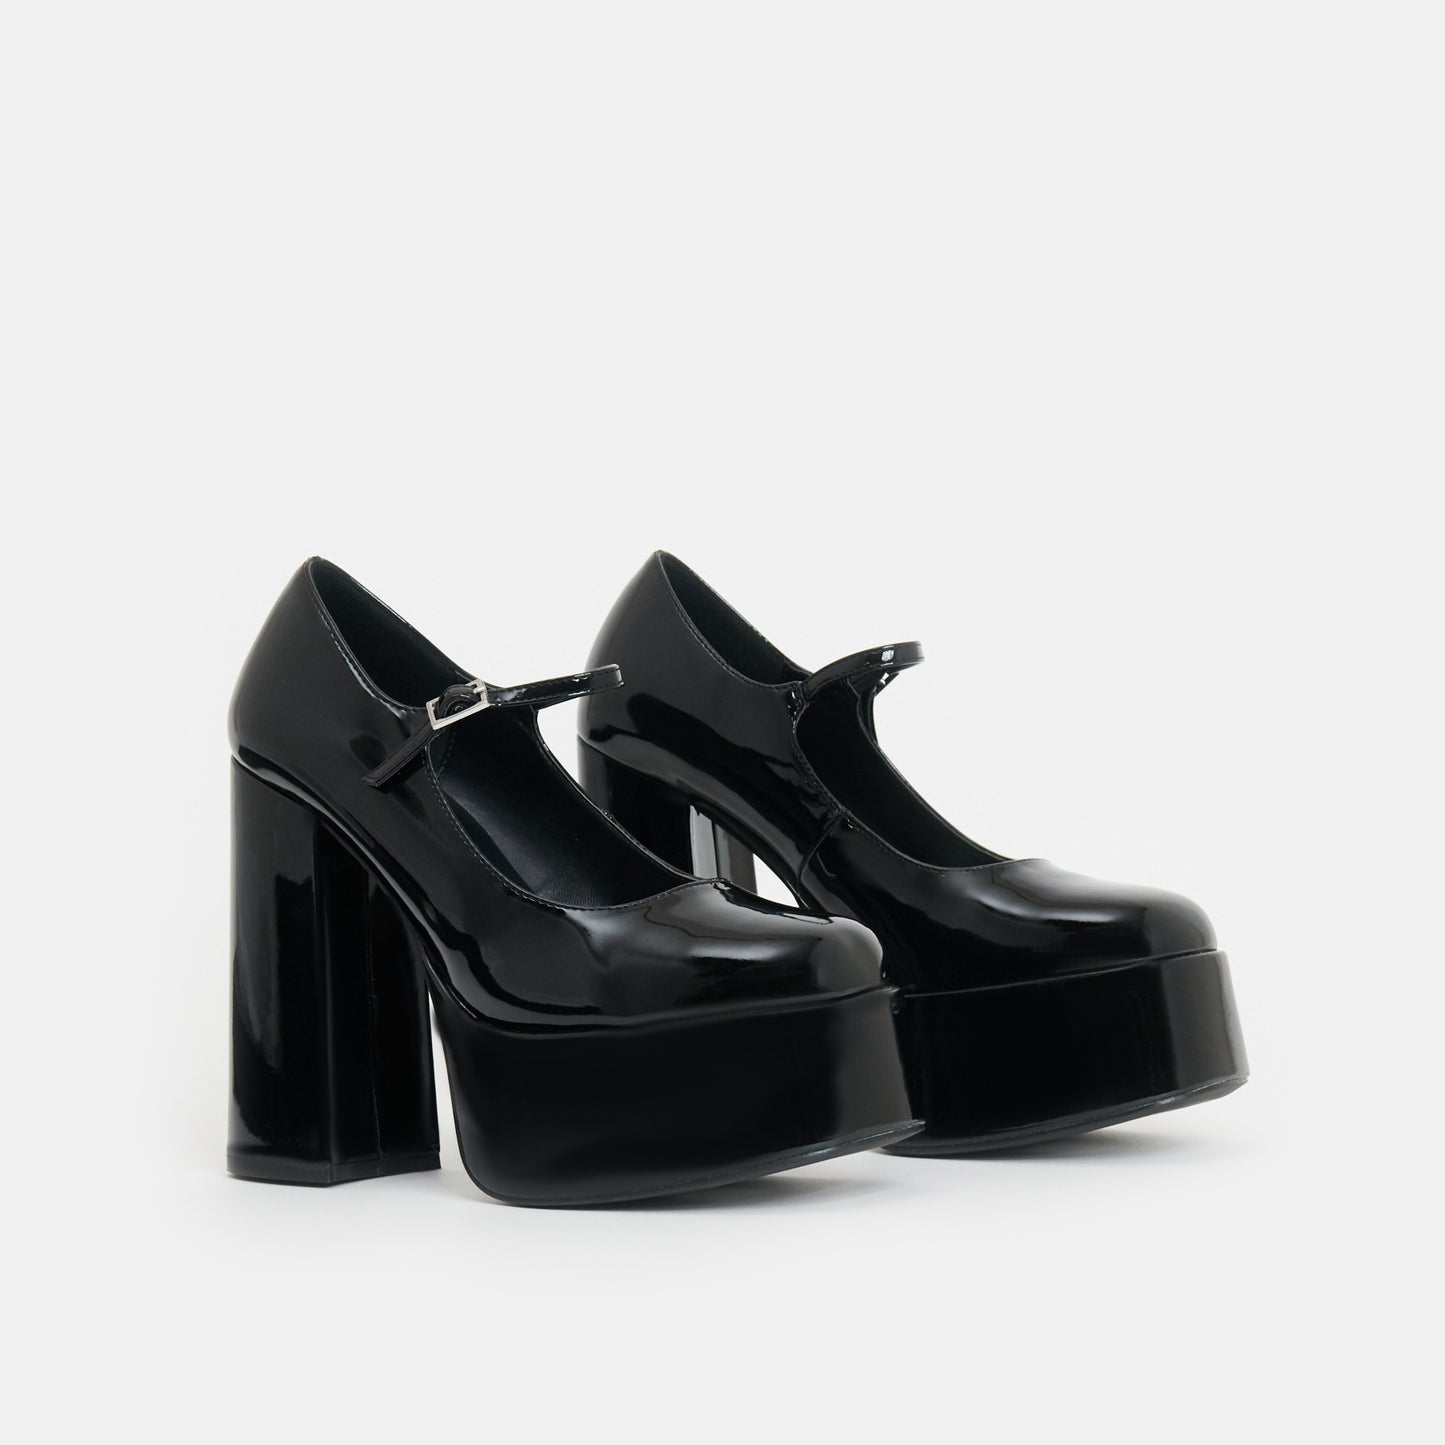 Darkbloom Black Patent Platform Heels - Shoes - KOI Footwear - Black - Three-Quarter View